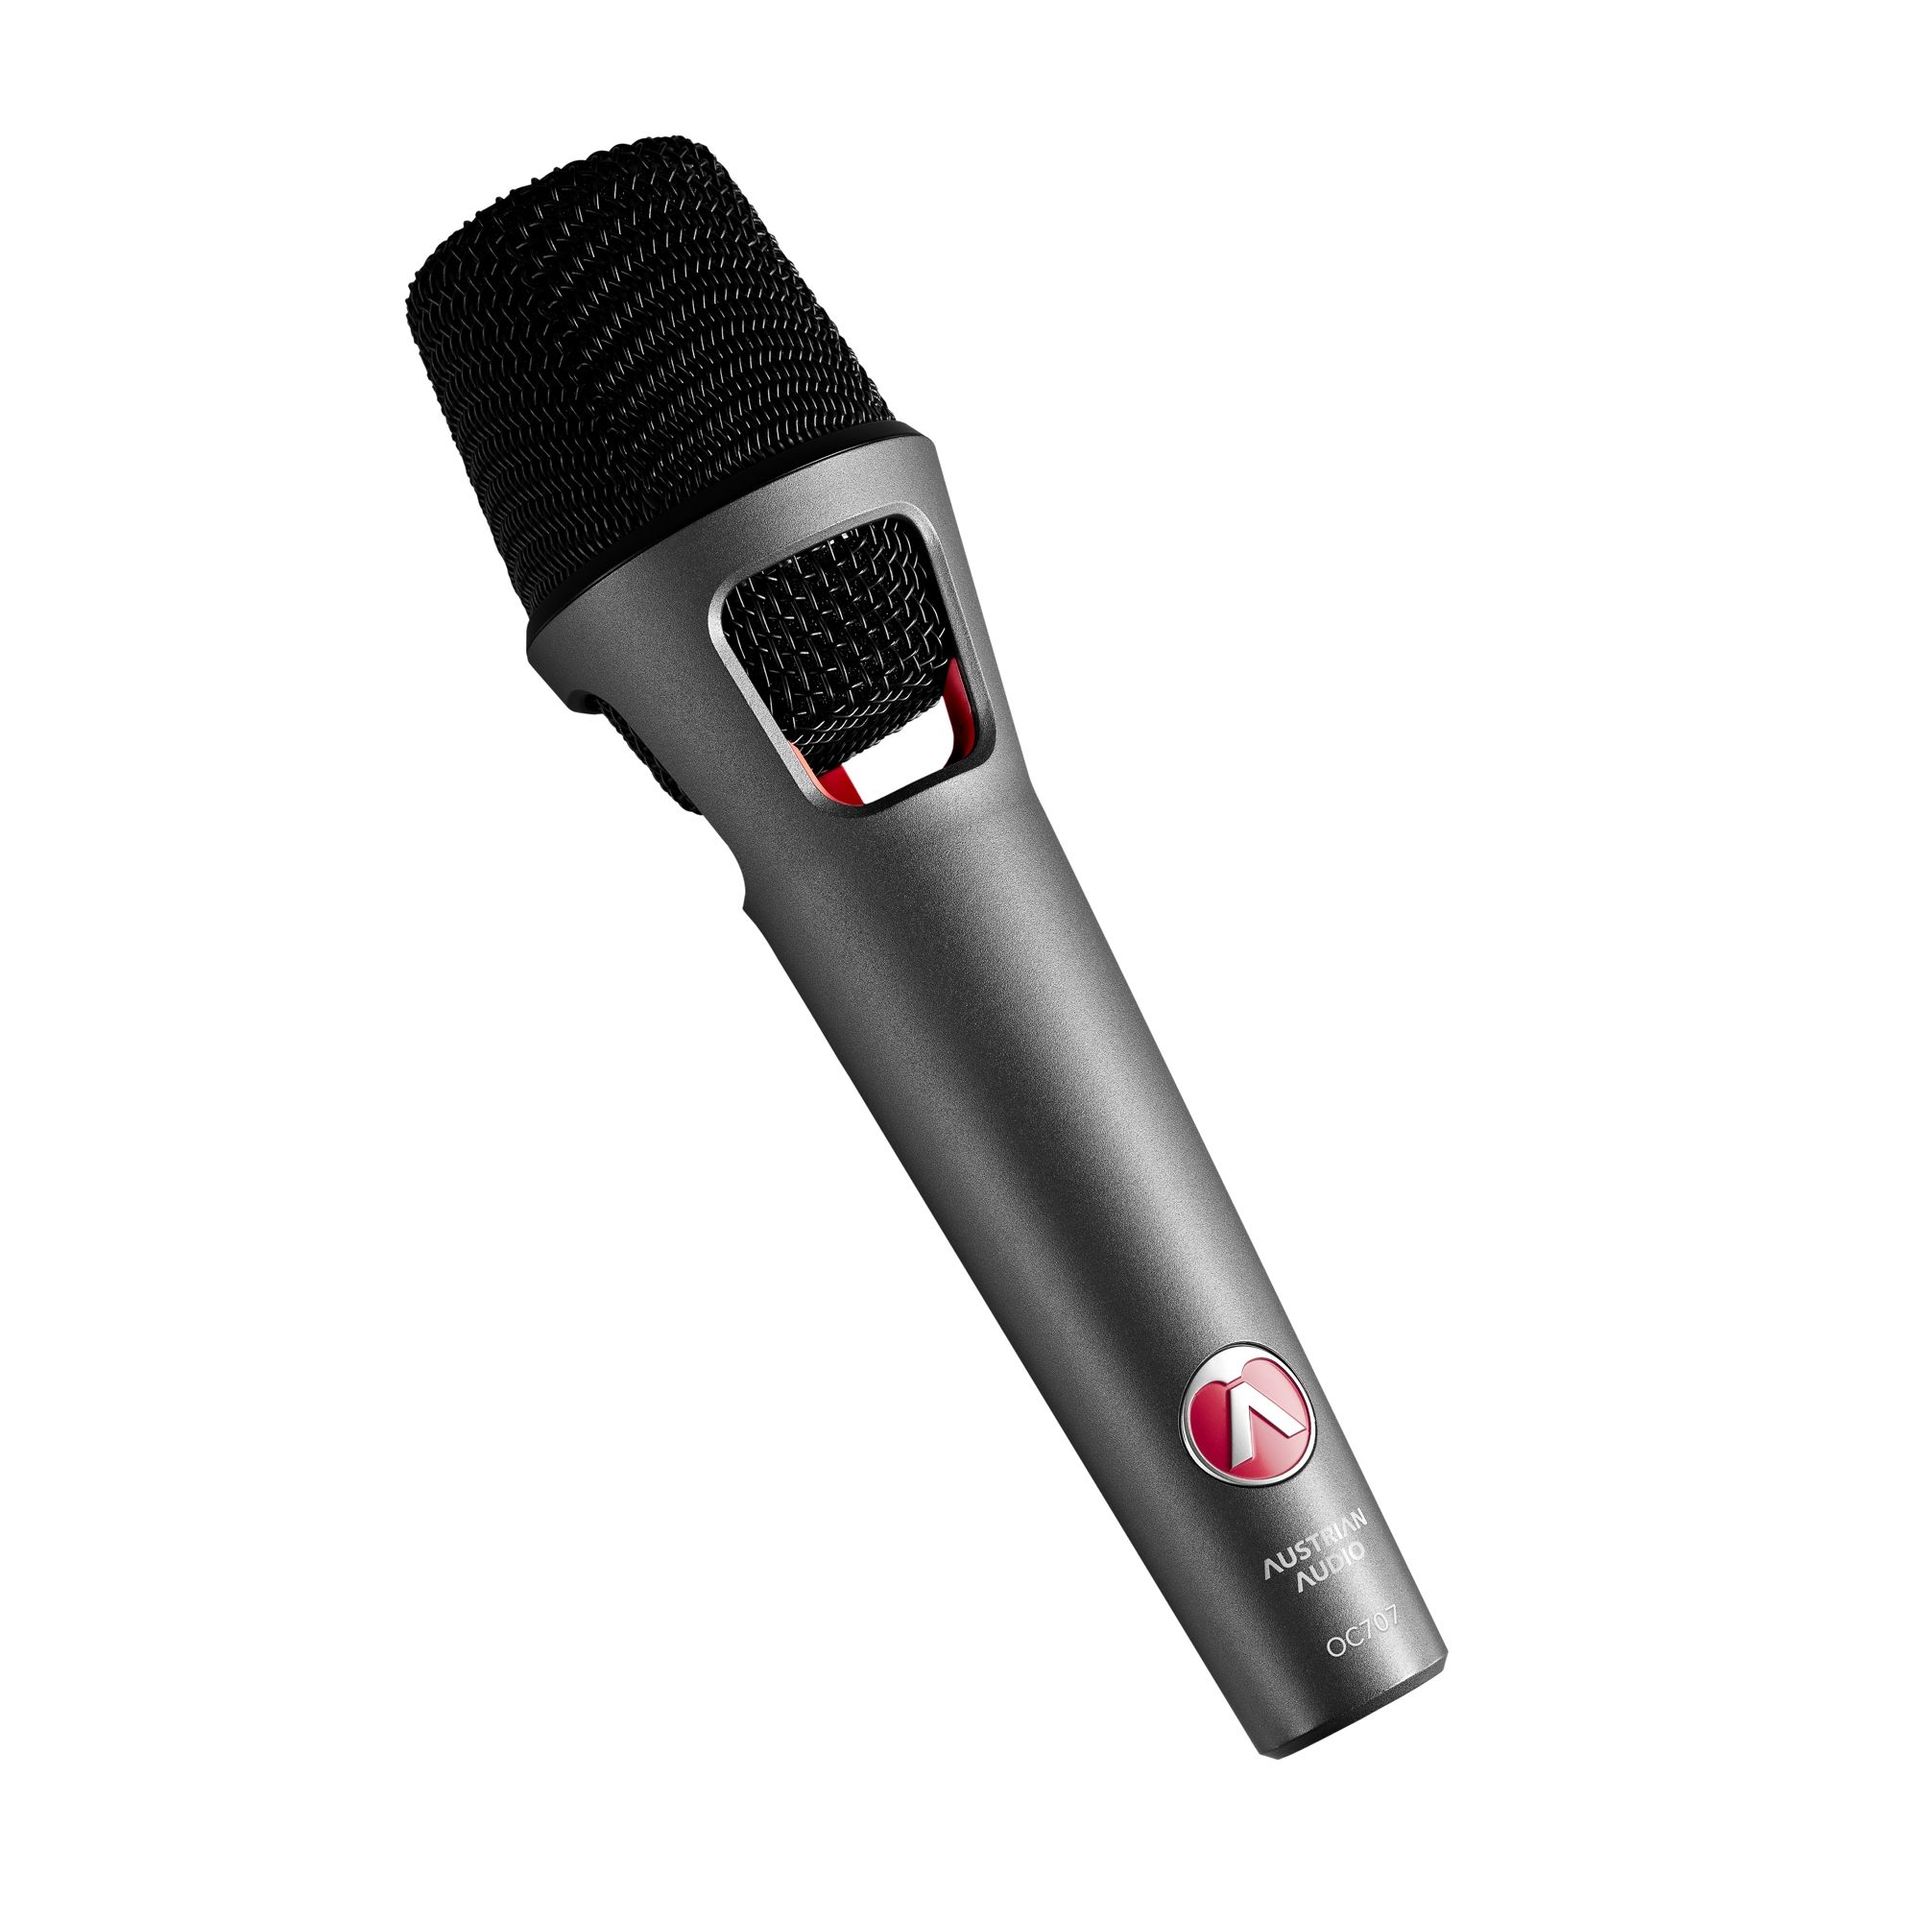 Austrian Audio OC707 Kondensator Gesangsmikrofon